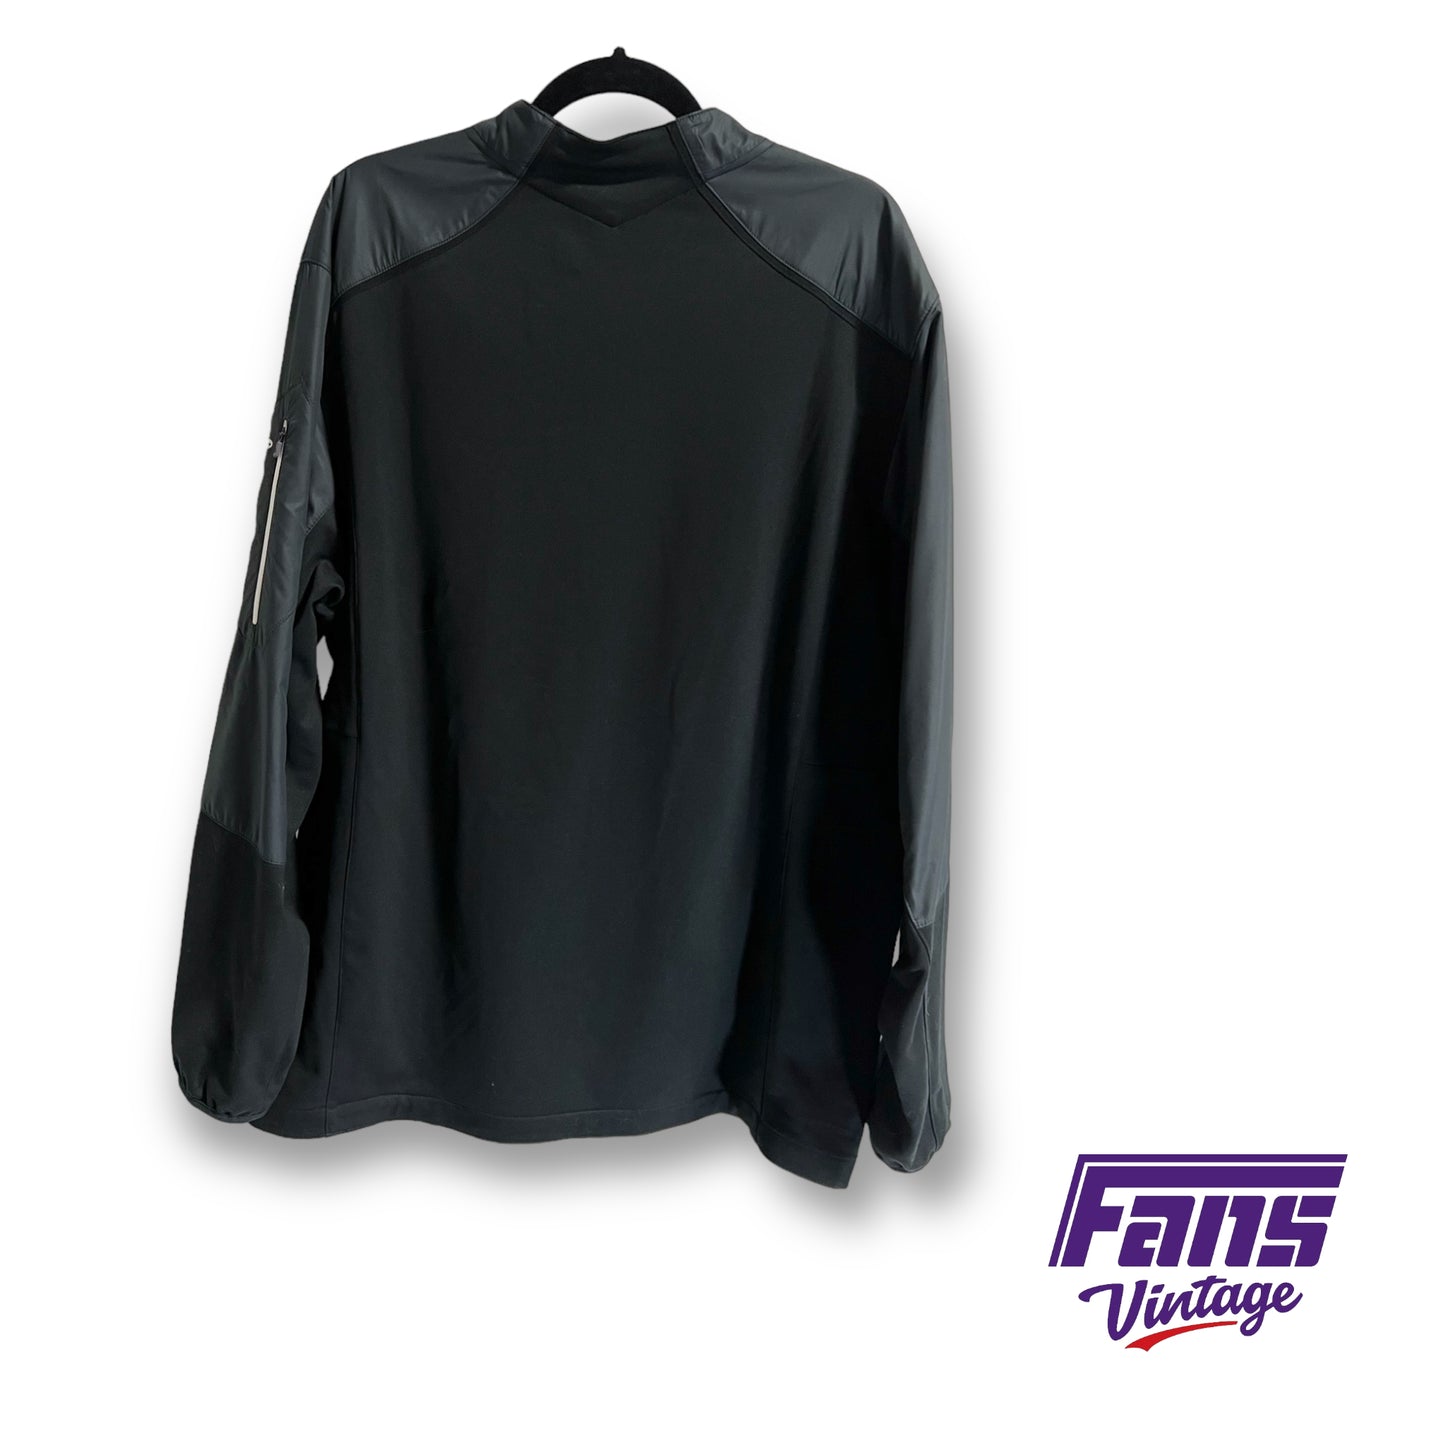 Nike TCU team issued lightweight half zip blackout pullover